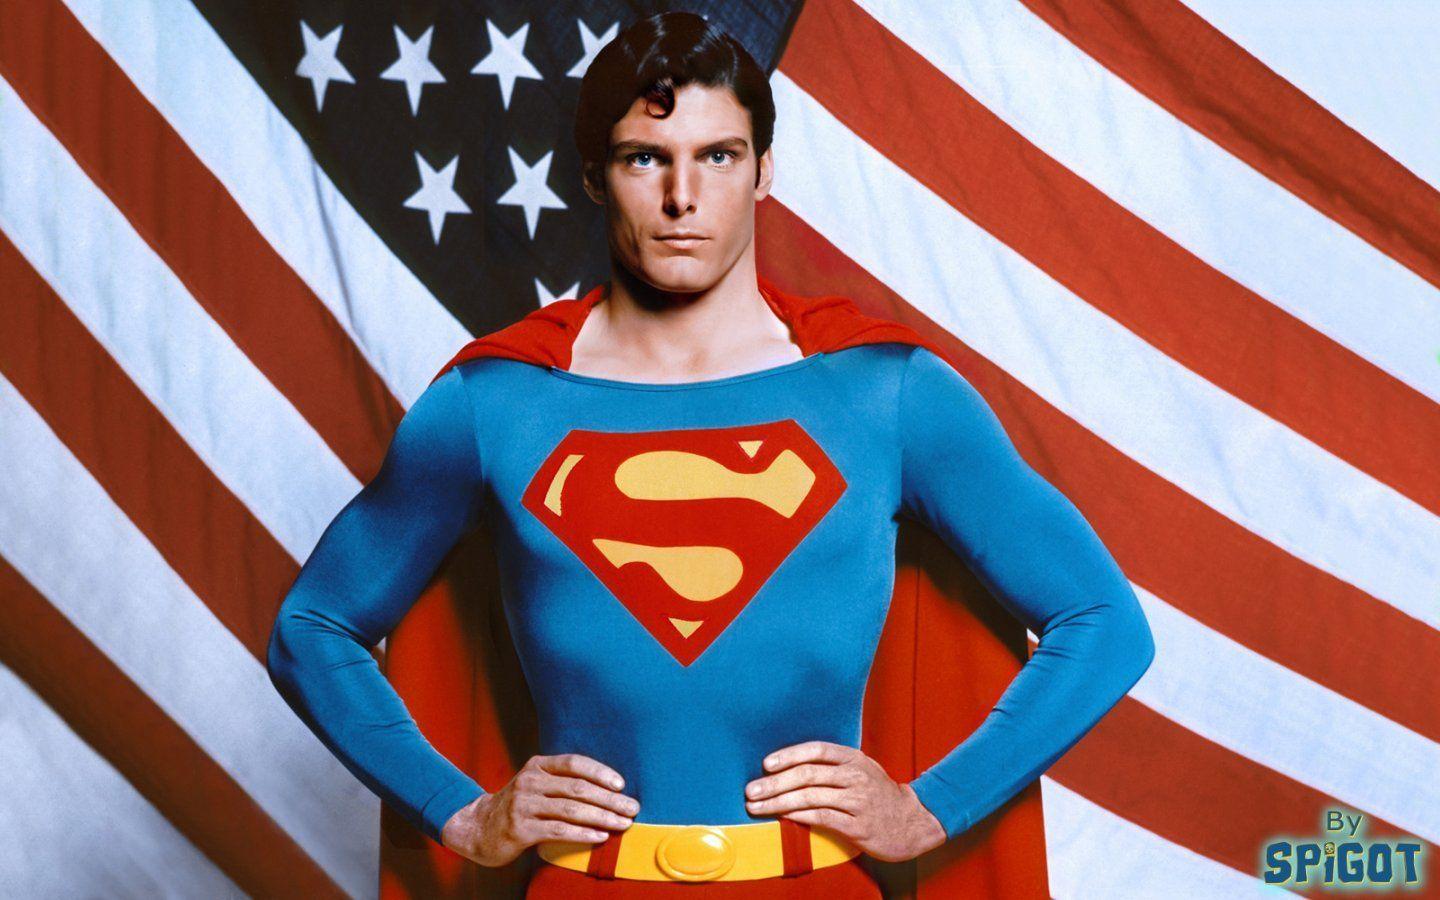 Christopher Reeve Superman Wallpaper